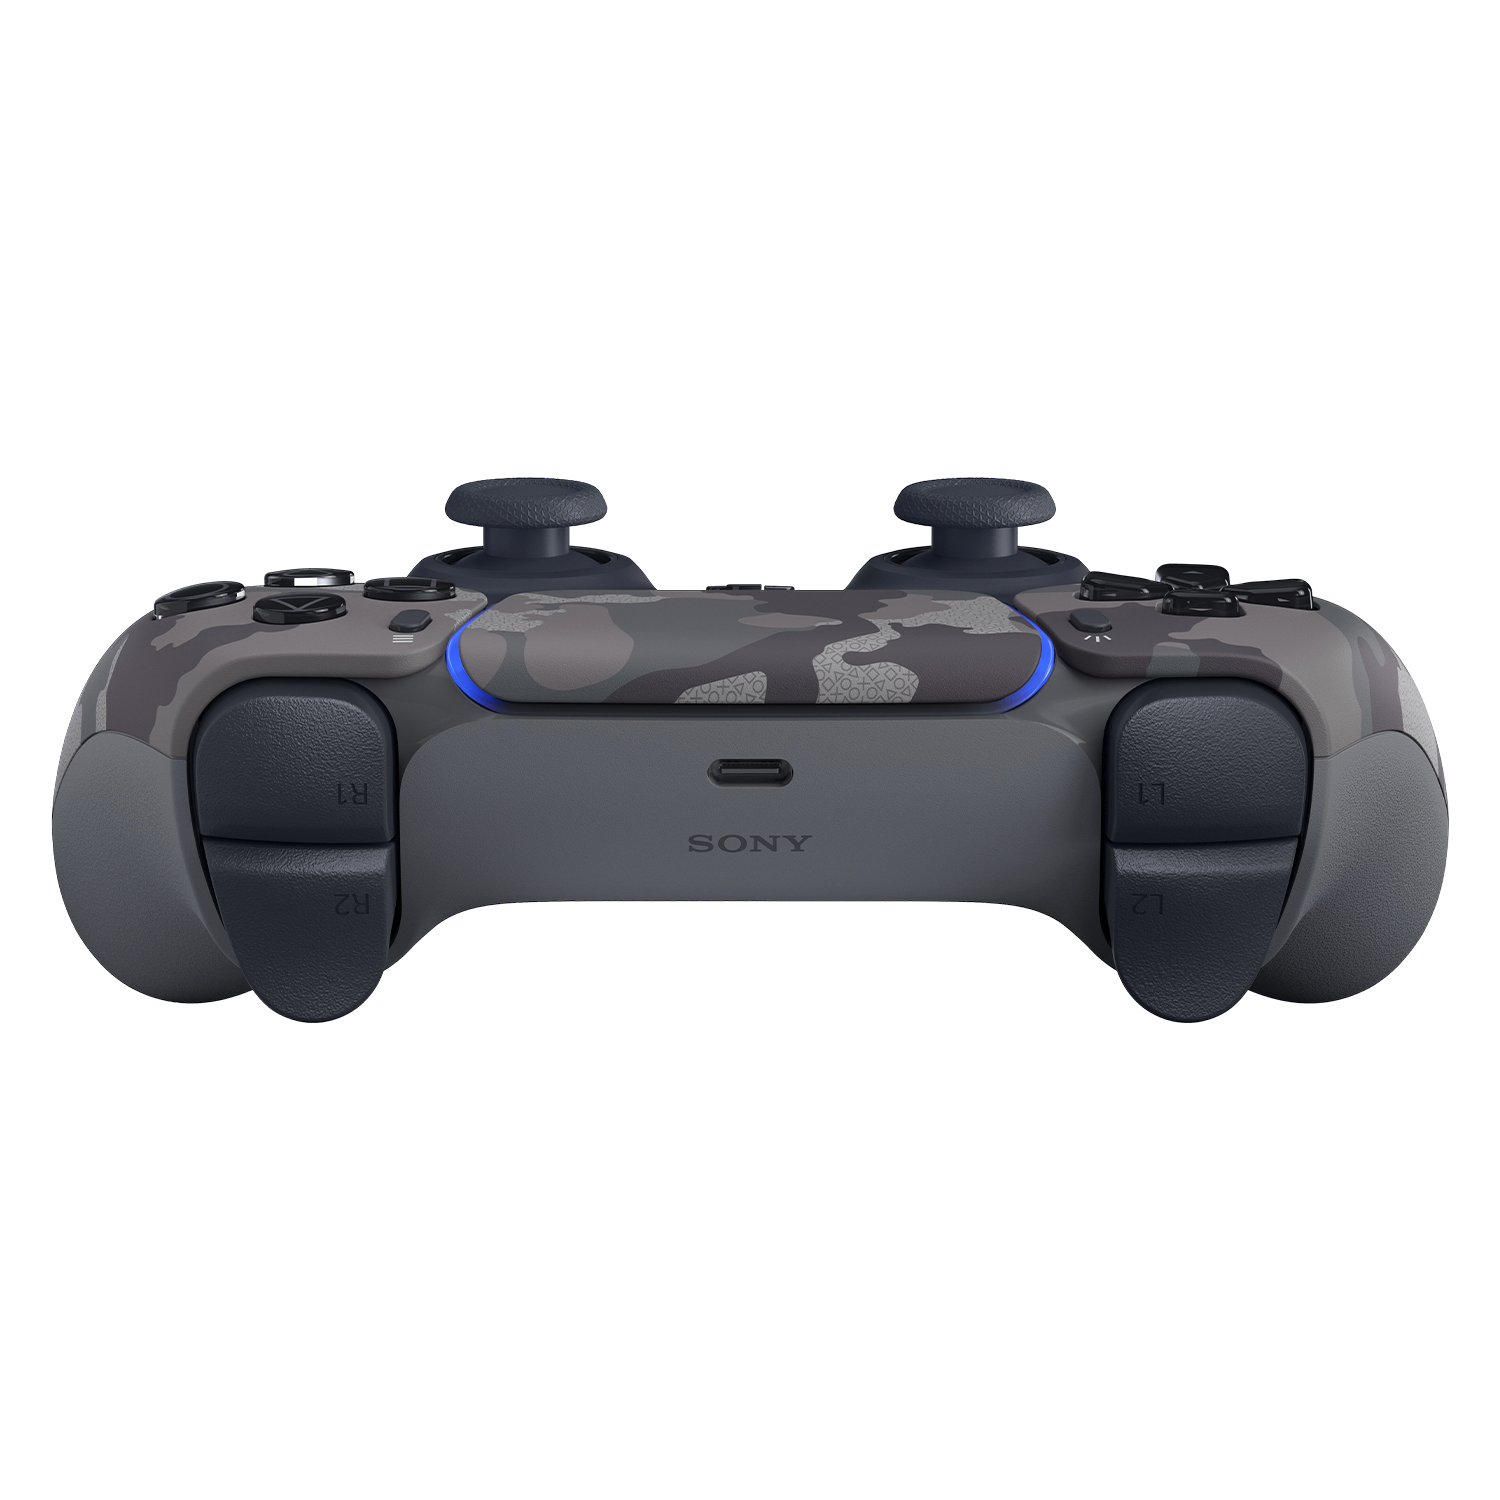 Controle Sem Fio Dualsense PlayStation 5 Cinza Camuflado